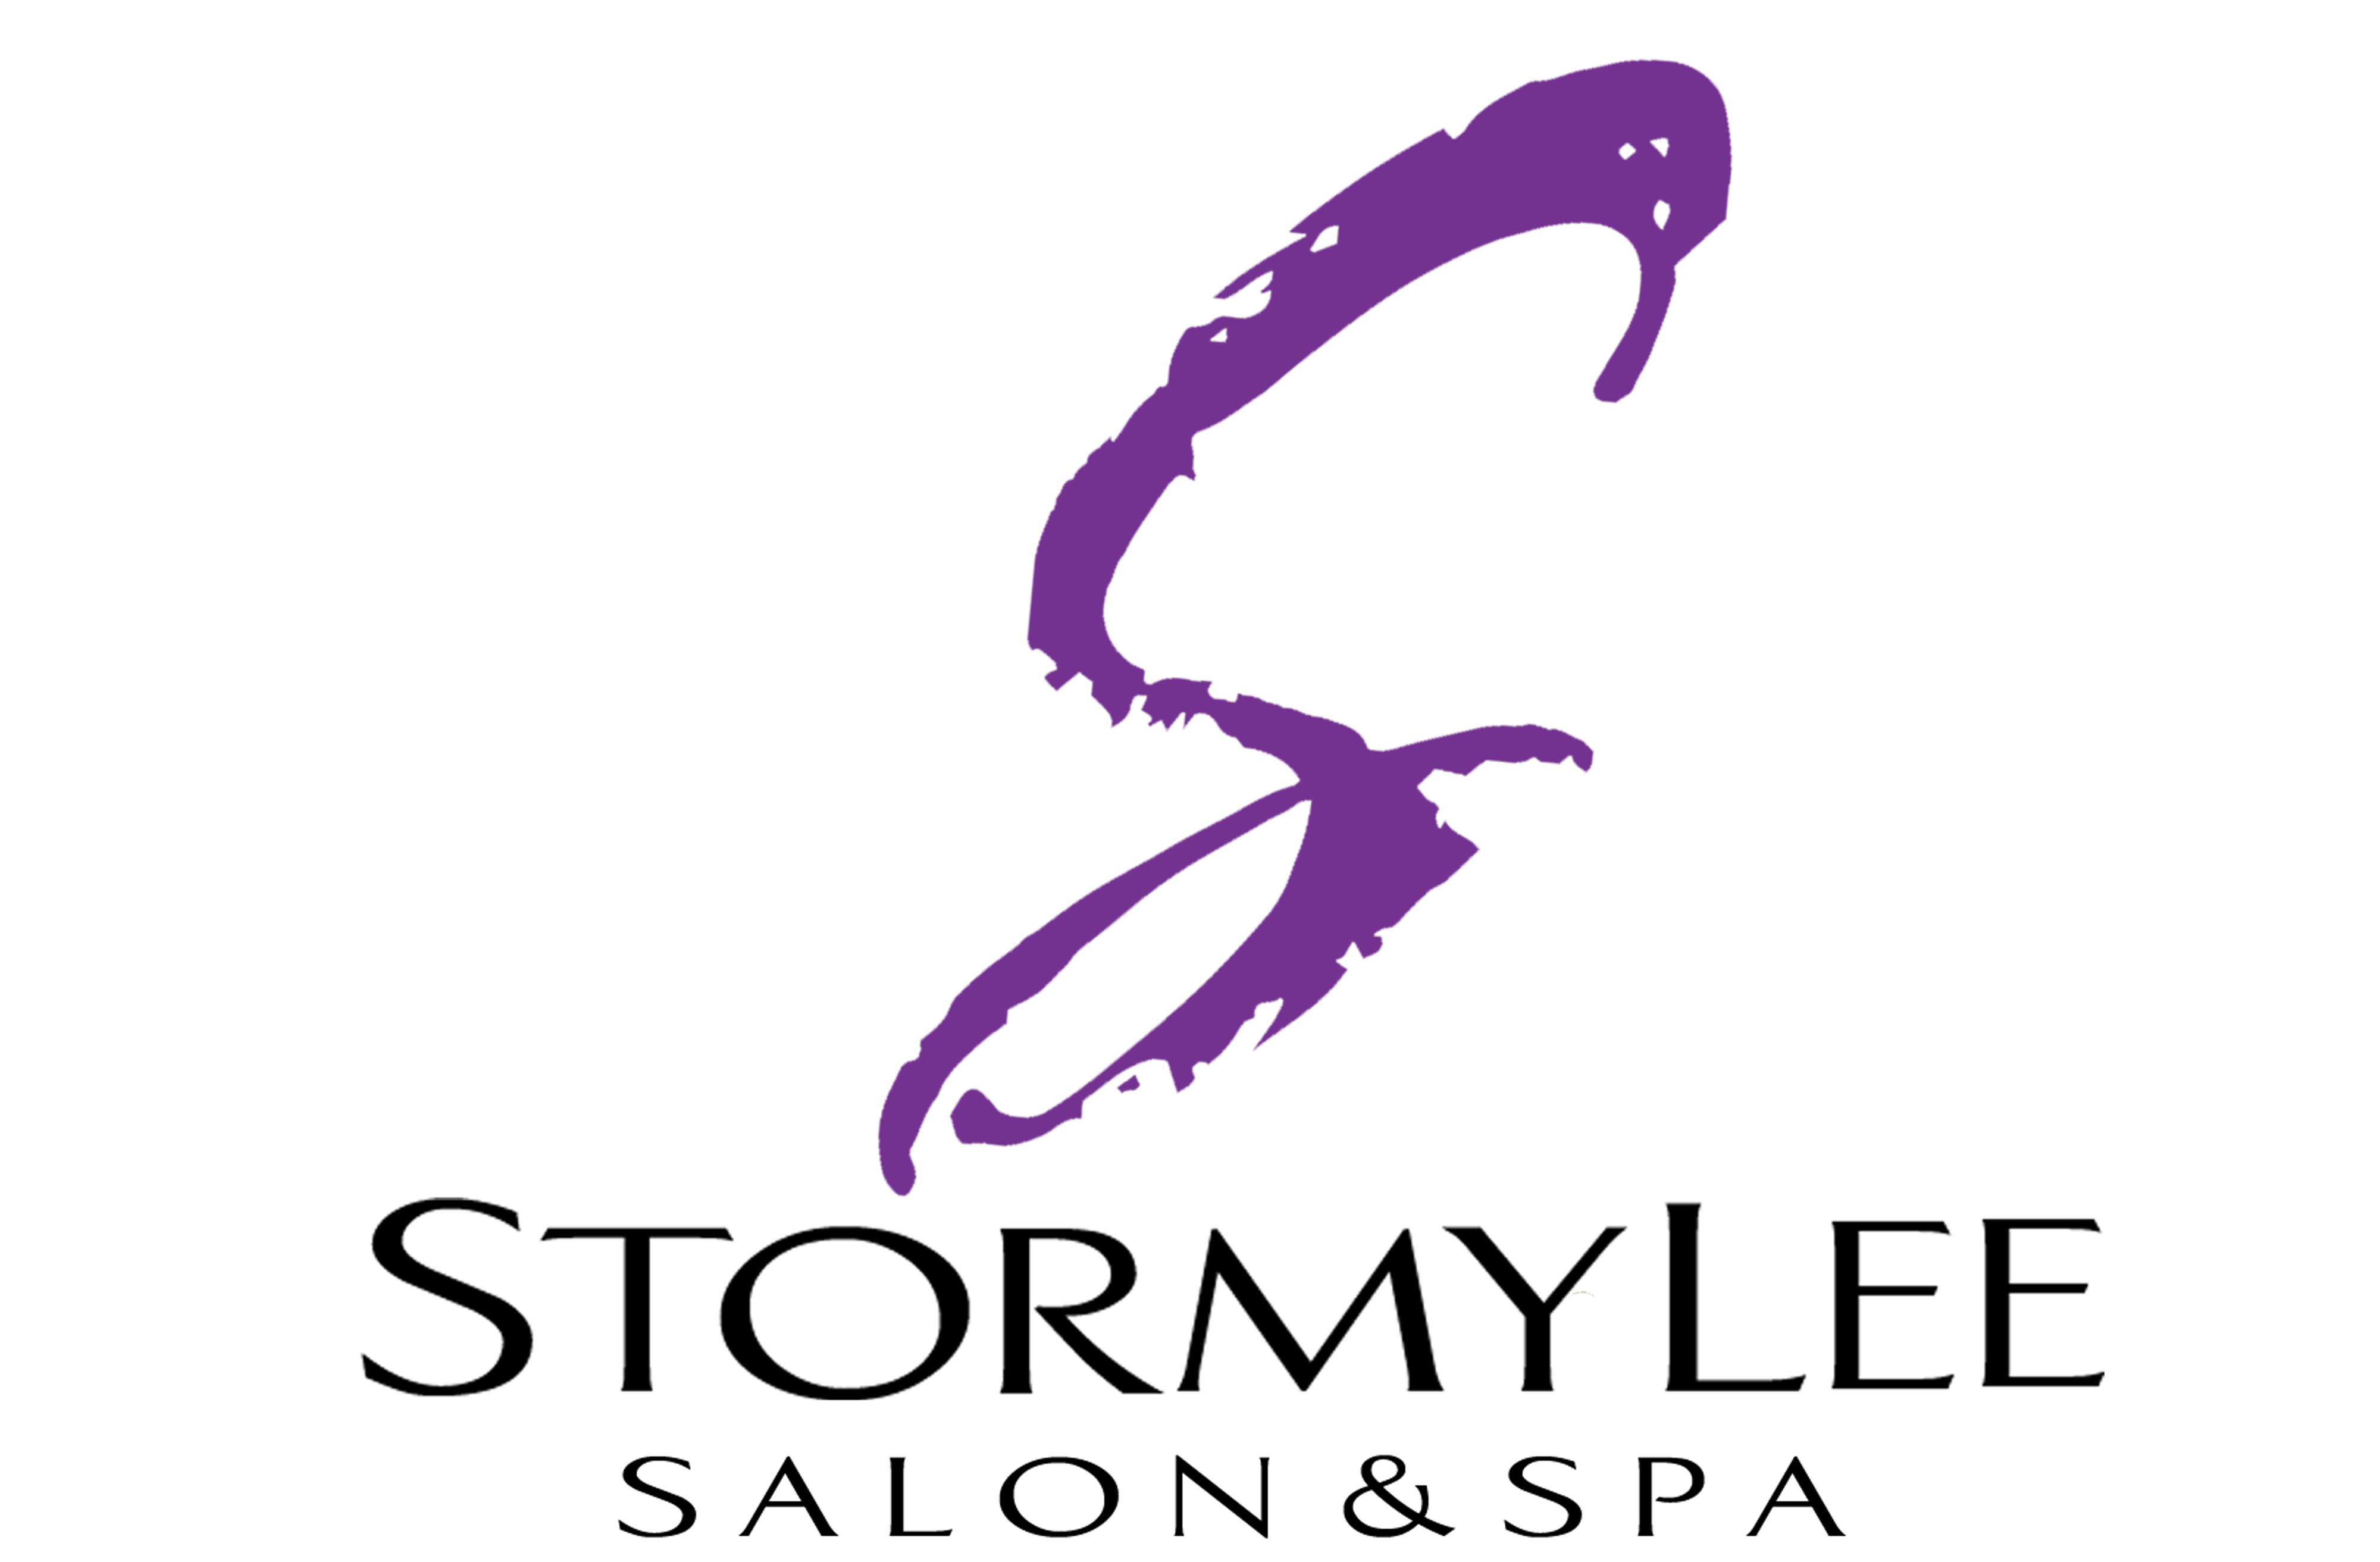 Stormylee salon & spa.